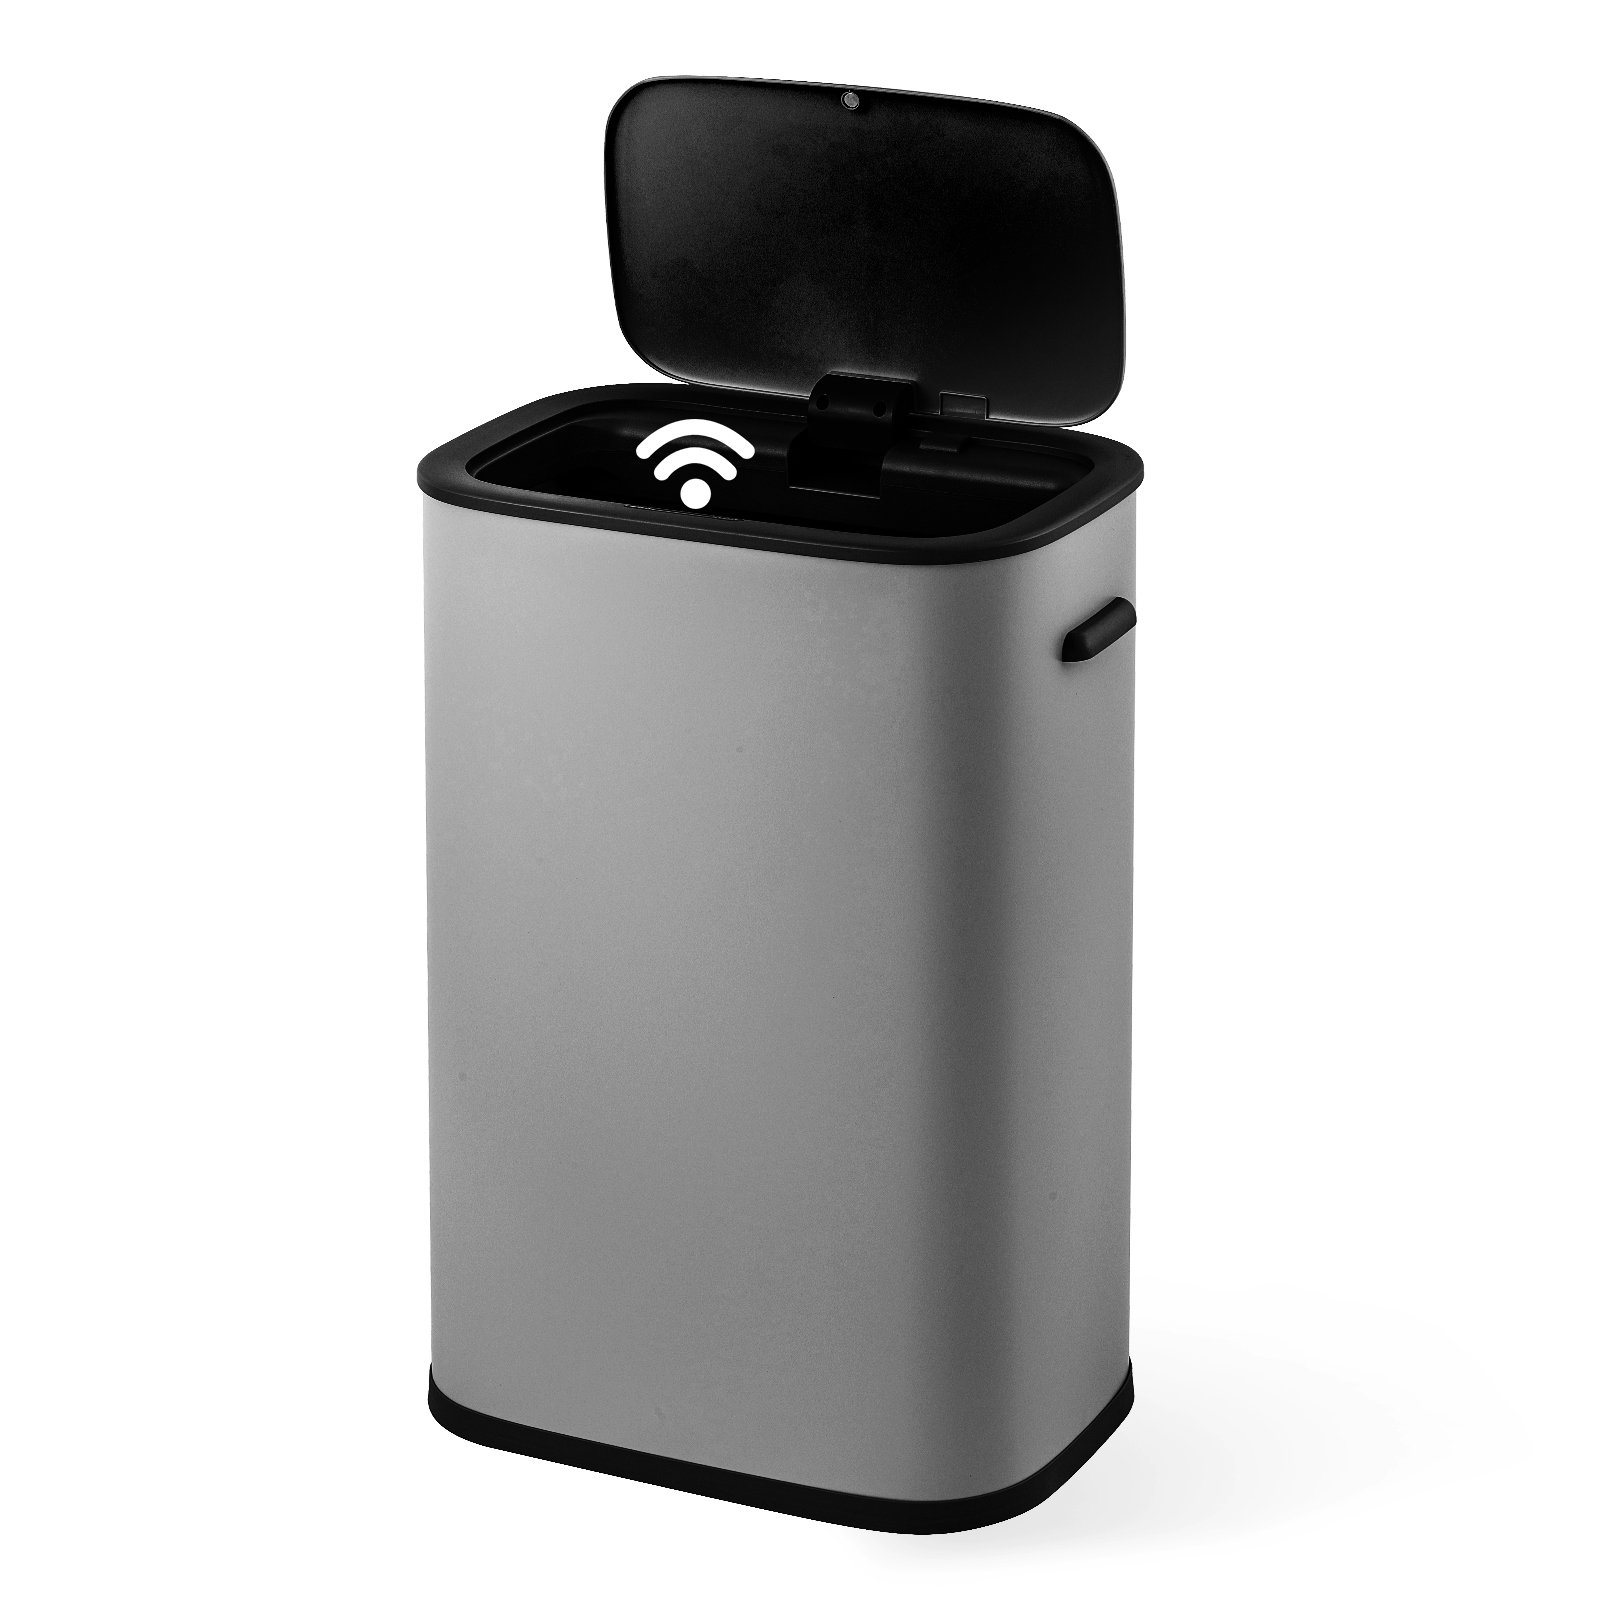 Innovaze Oval Motion Sensor Trash Can, 13.2 gal - Silver